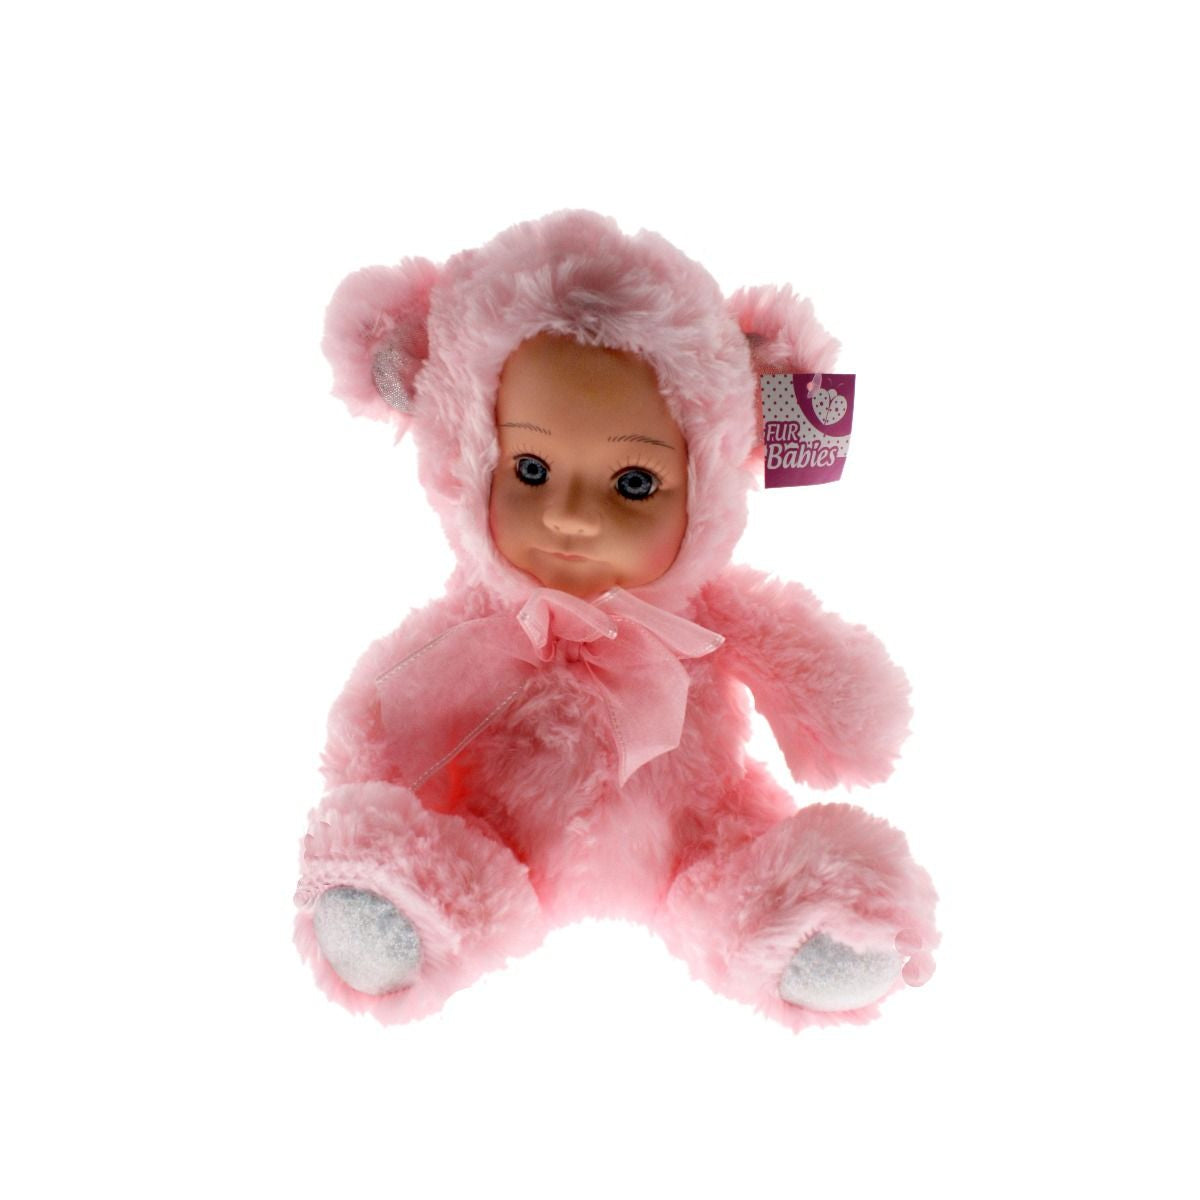 Fur Baby - Pink and Silver Bear-Yarrawonga Fun and Games.